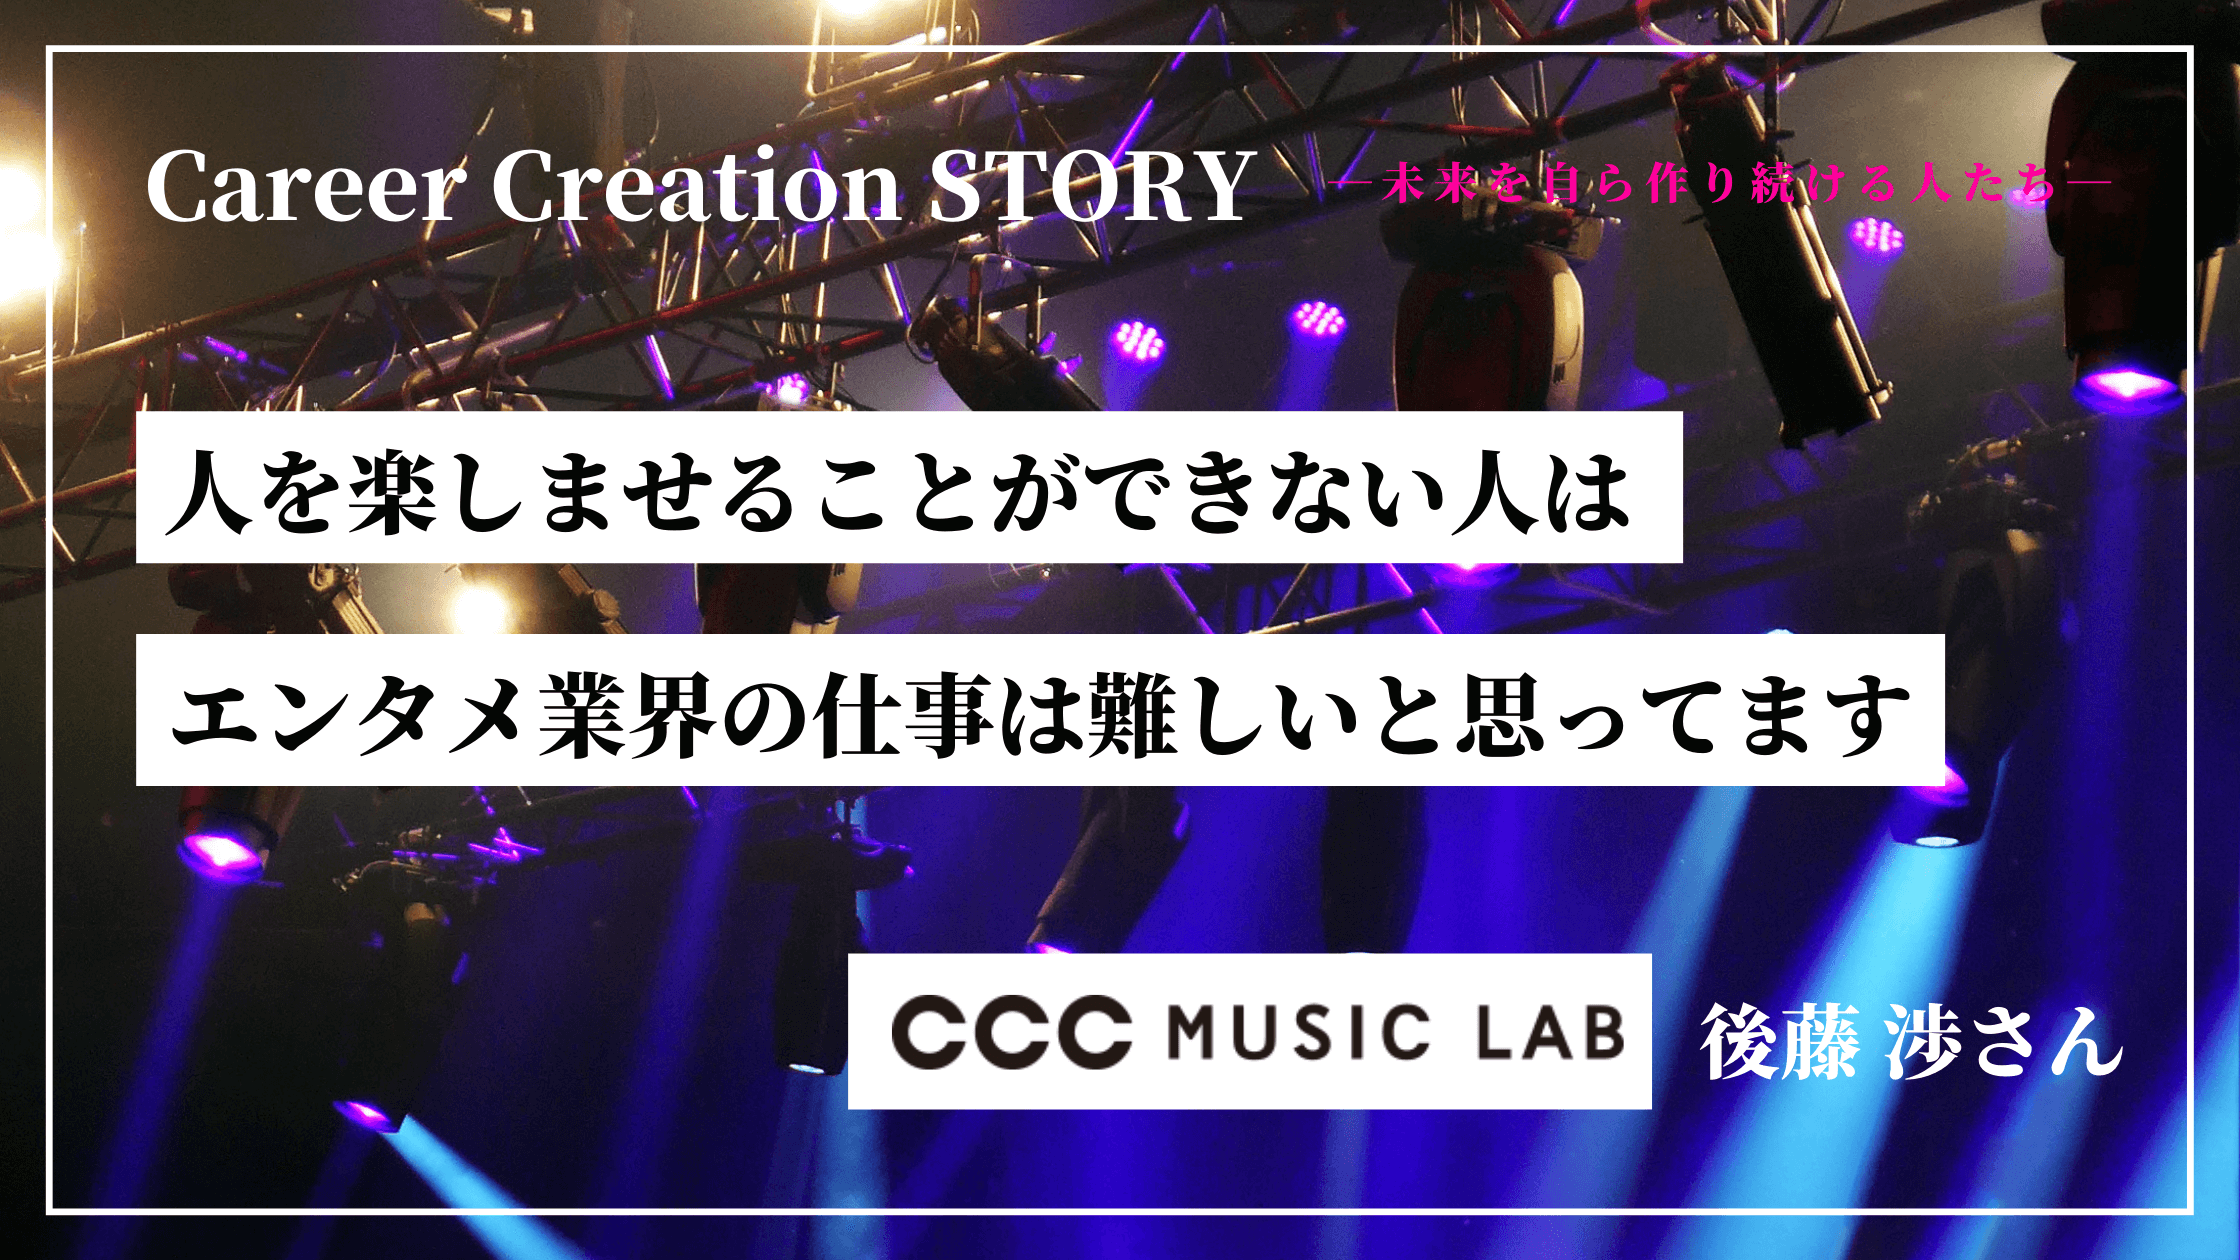 Career Creation STORY #10：studio-L 渡辺直樹さん